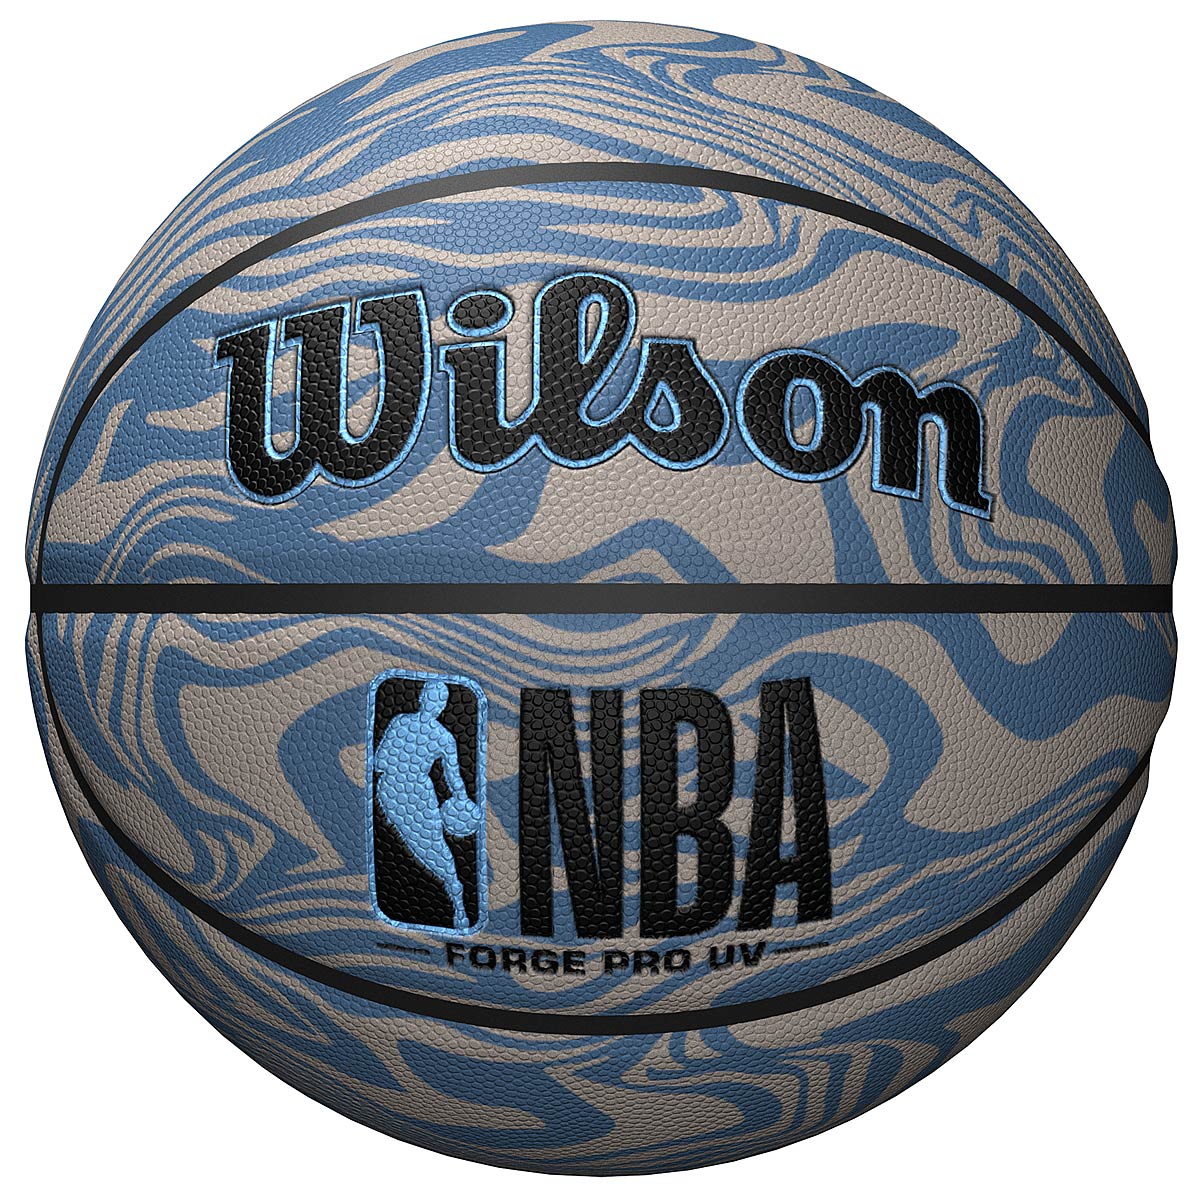 Image of Wilson NBA Forge Pro Uv Basketball, Lifestyle